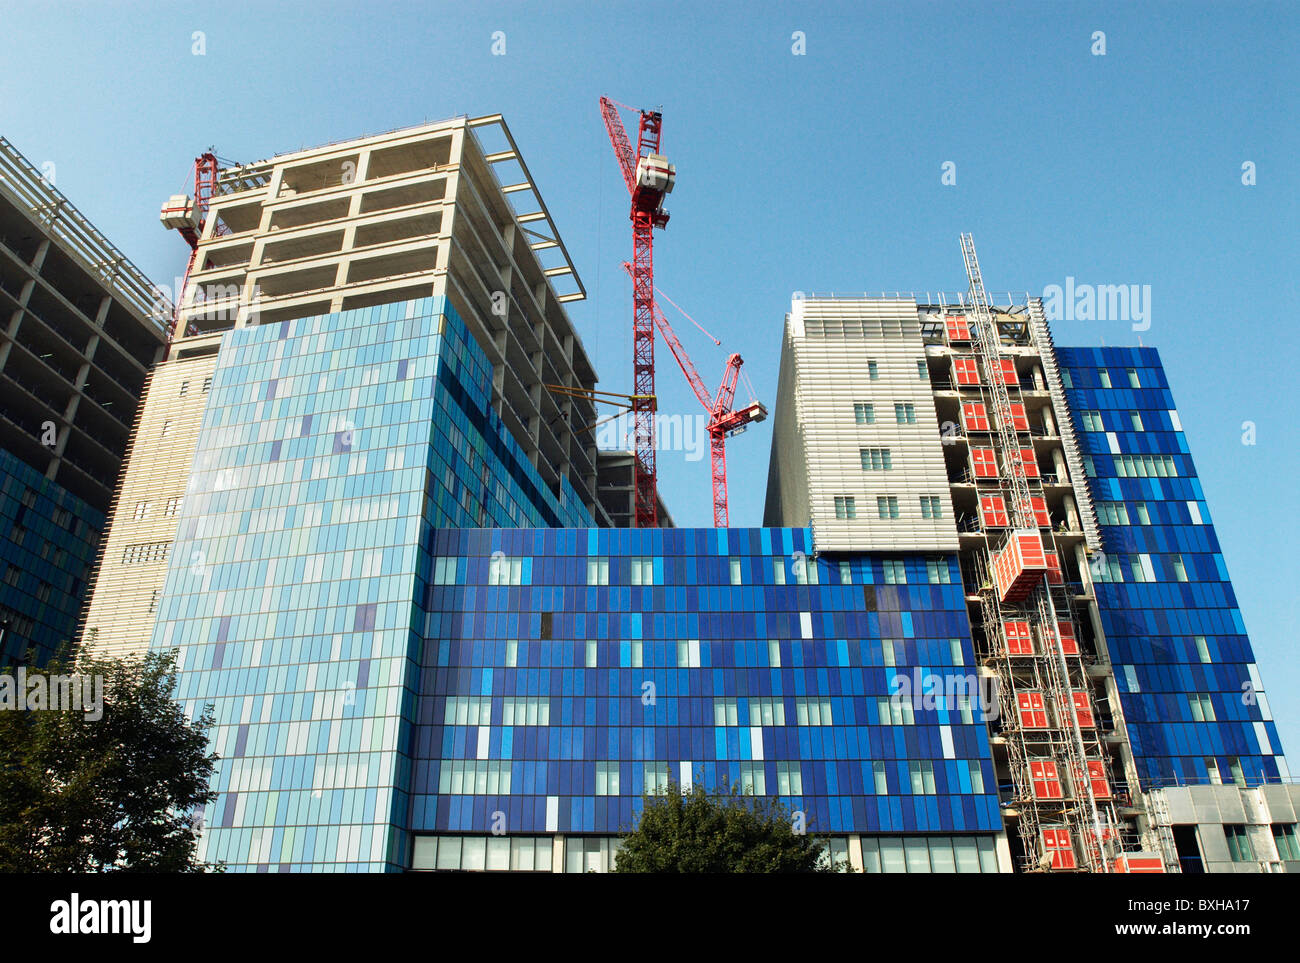 Royal London Hospital under construction becoming Britains largest new hospital Whitechapel East London UK Stock Photo